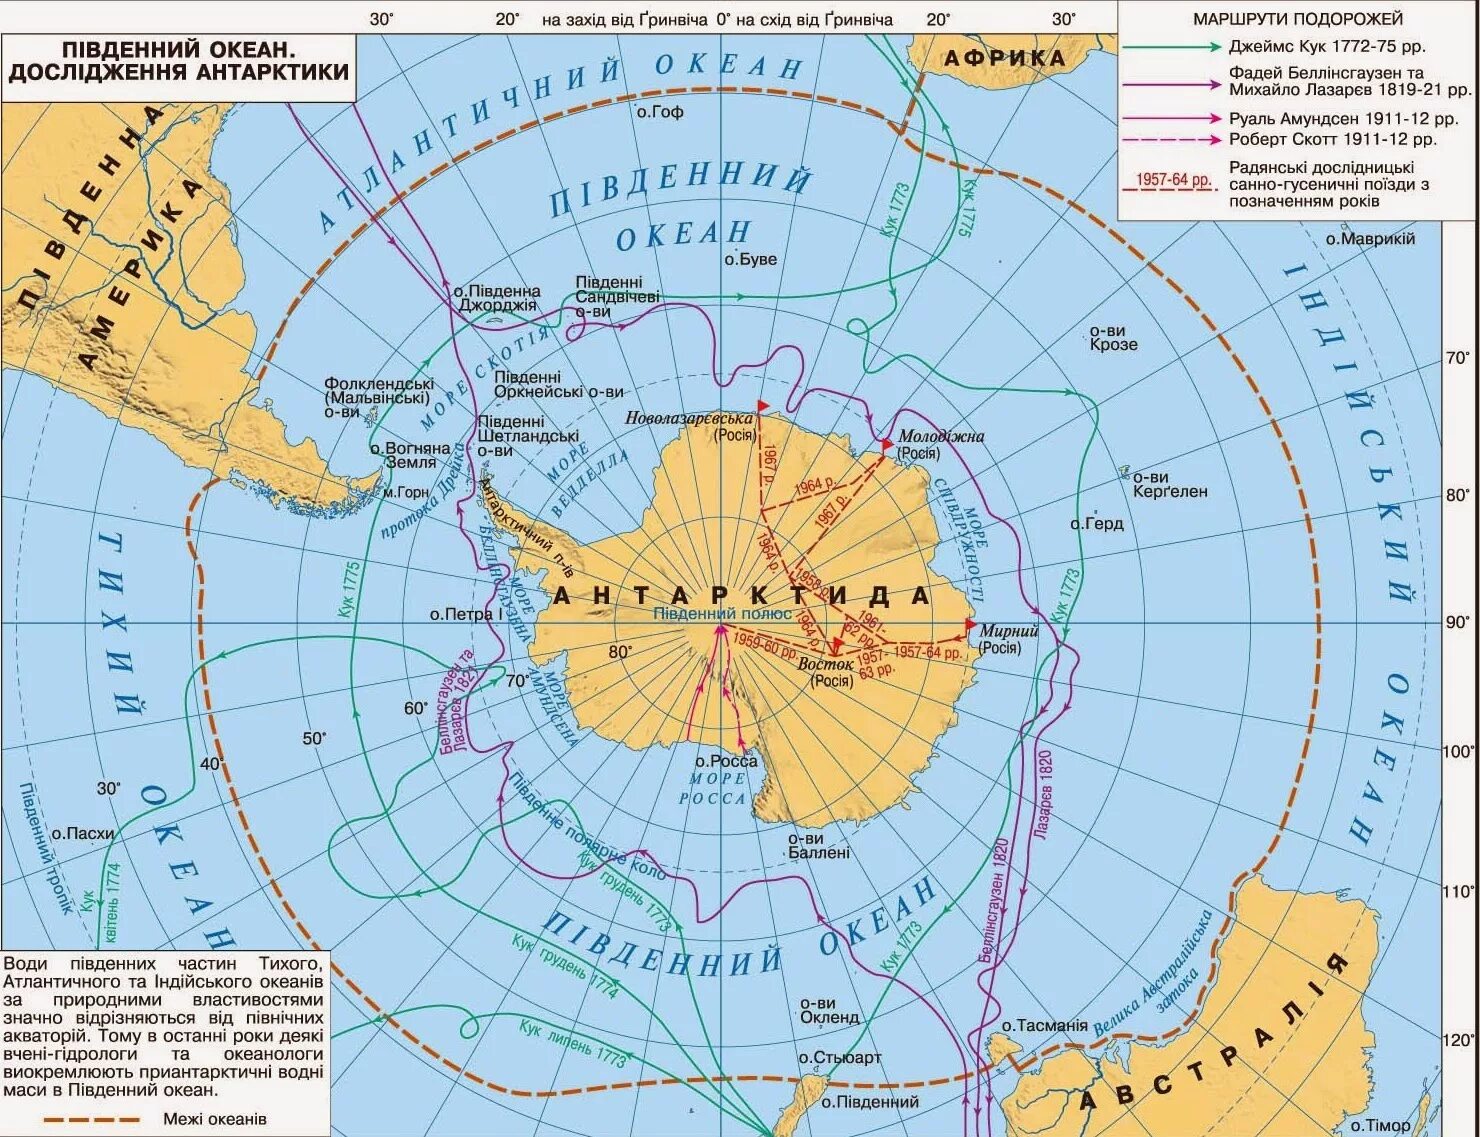 Показать на карте Северный Ледовитый океан и Антарктиду. Море Беллинсгаузена — ; море Амундсена —. Границы Южного океана на карте. Местоположение антарктиды